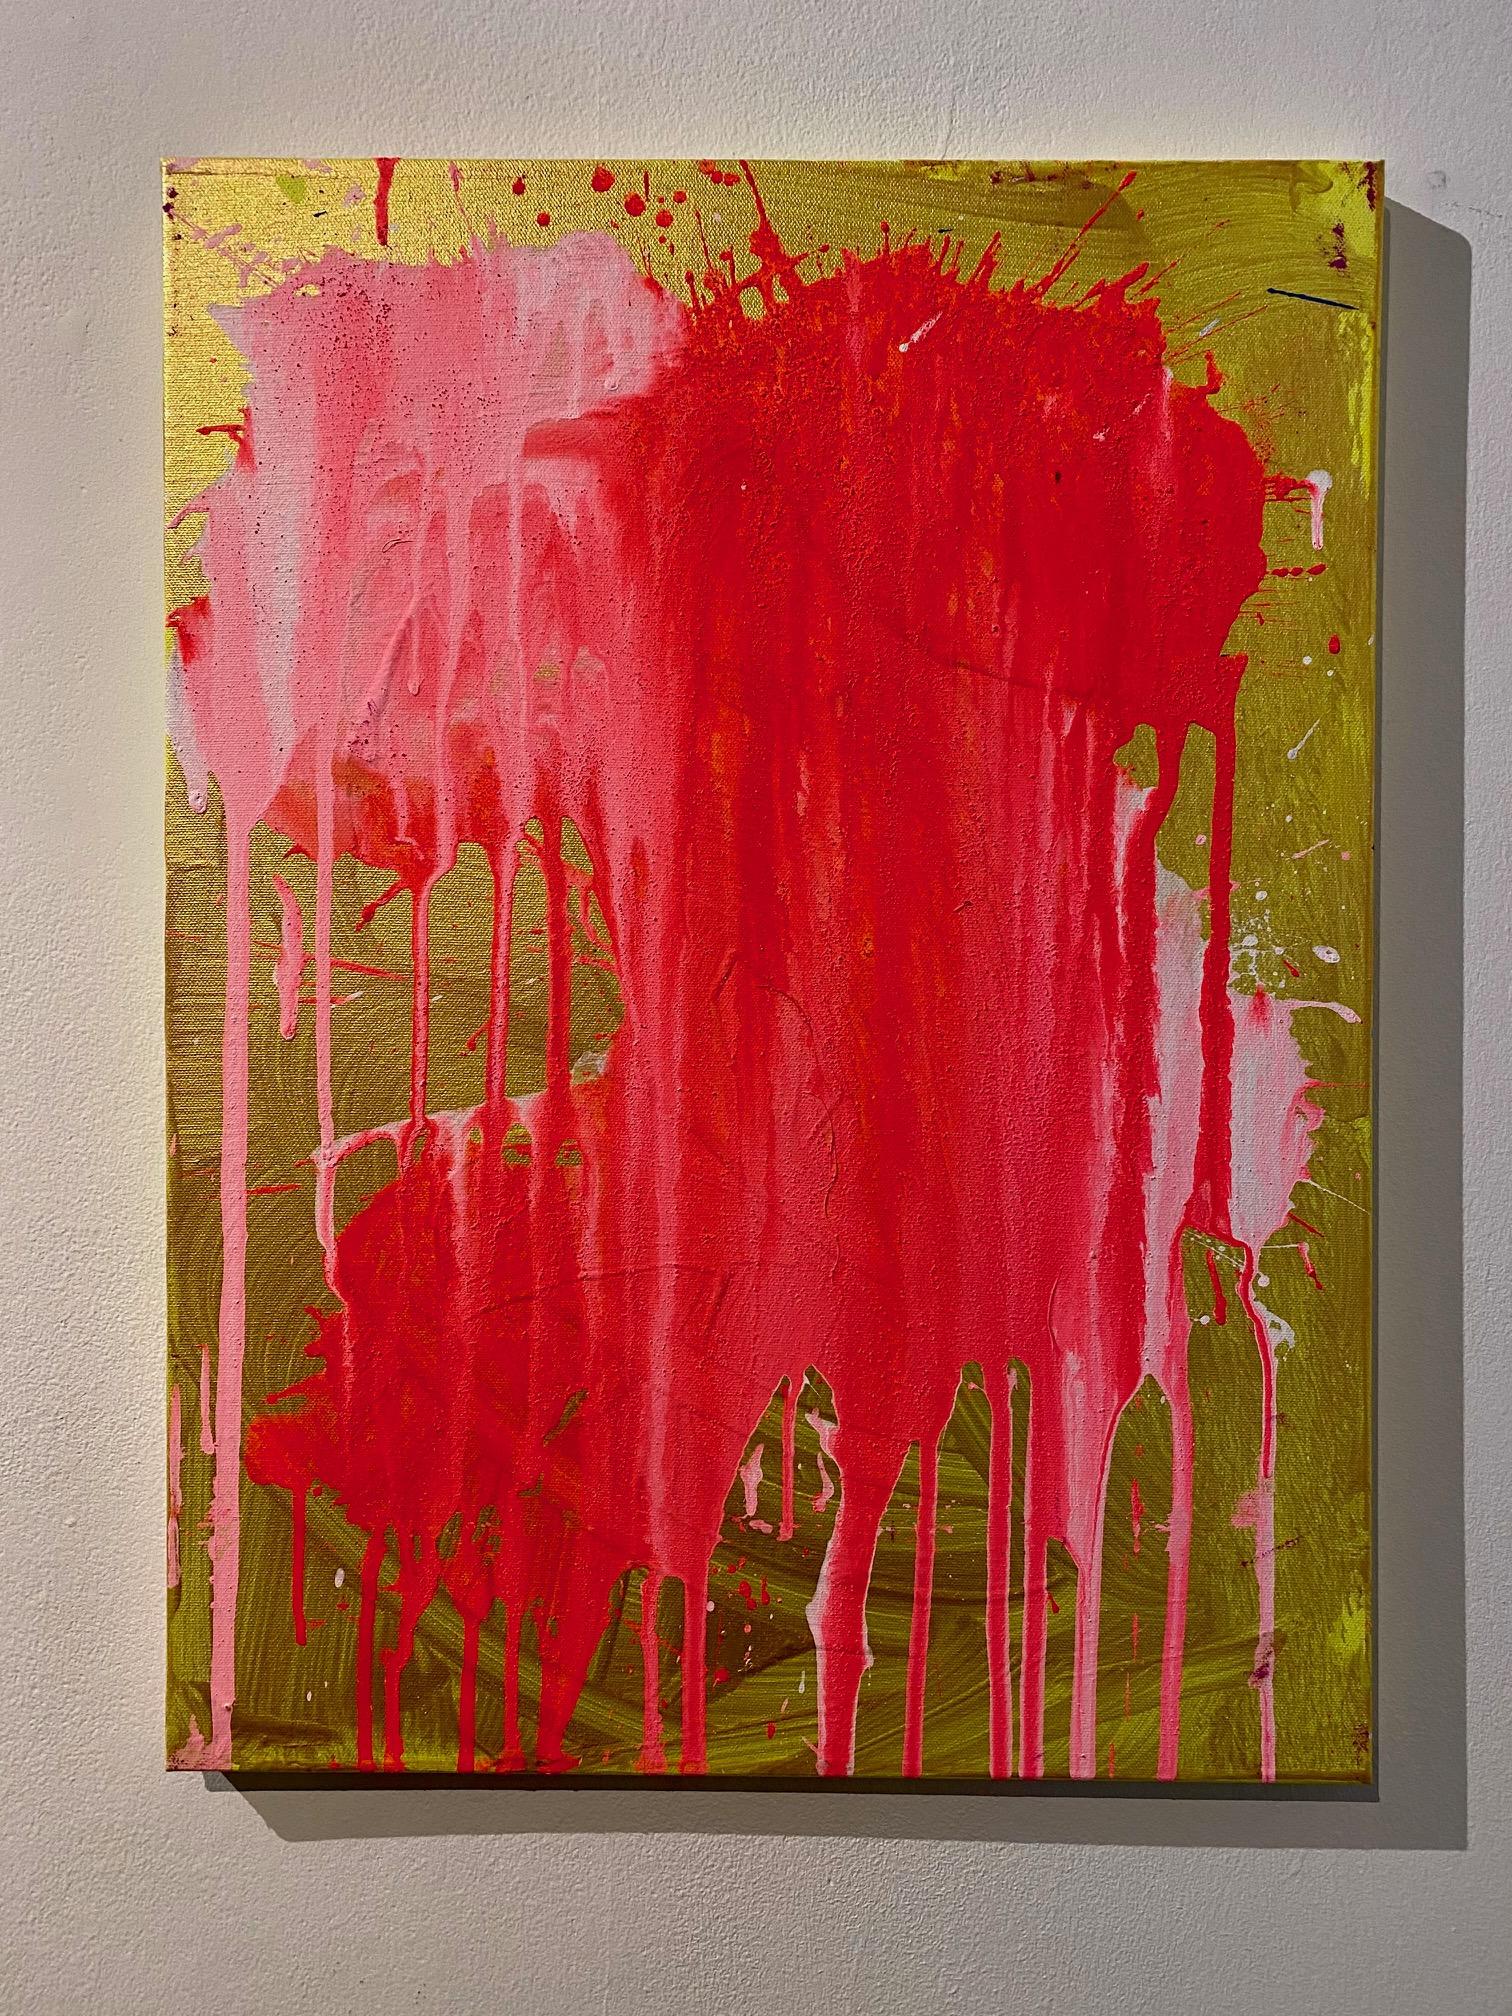 Abstract Painting Ushio Shinohara - « Red and Gold », peinture acrylique sur toile - peinture abstraite de boxe